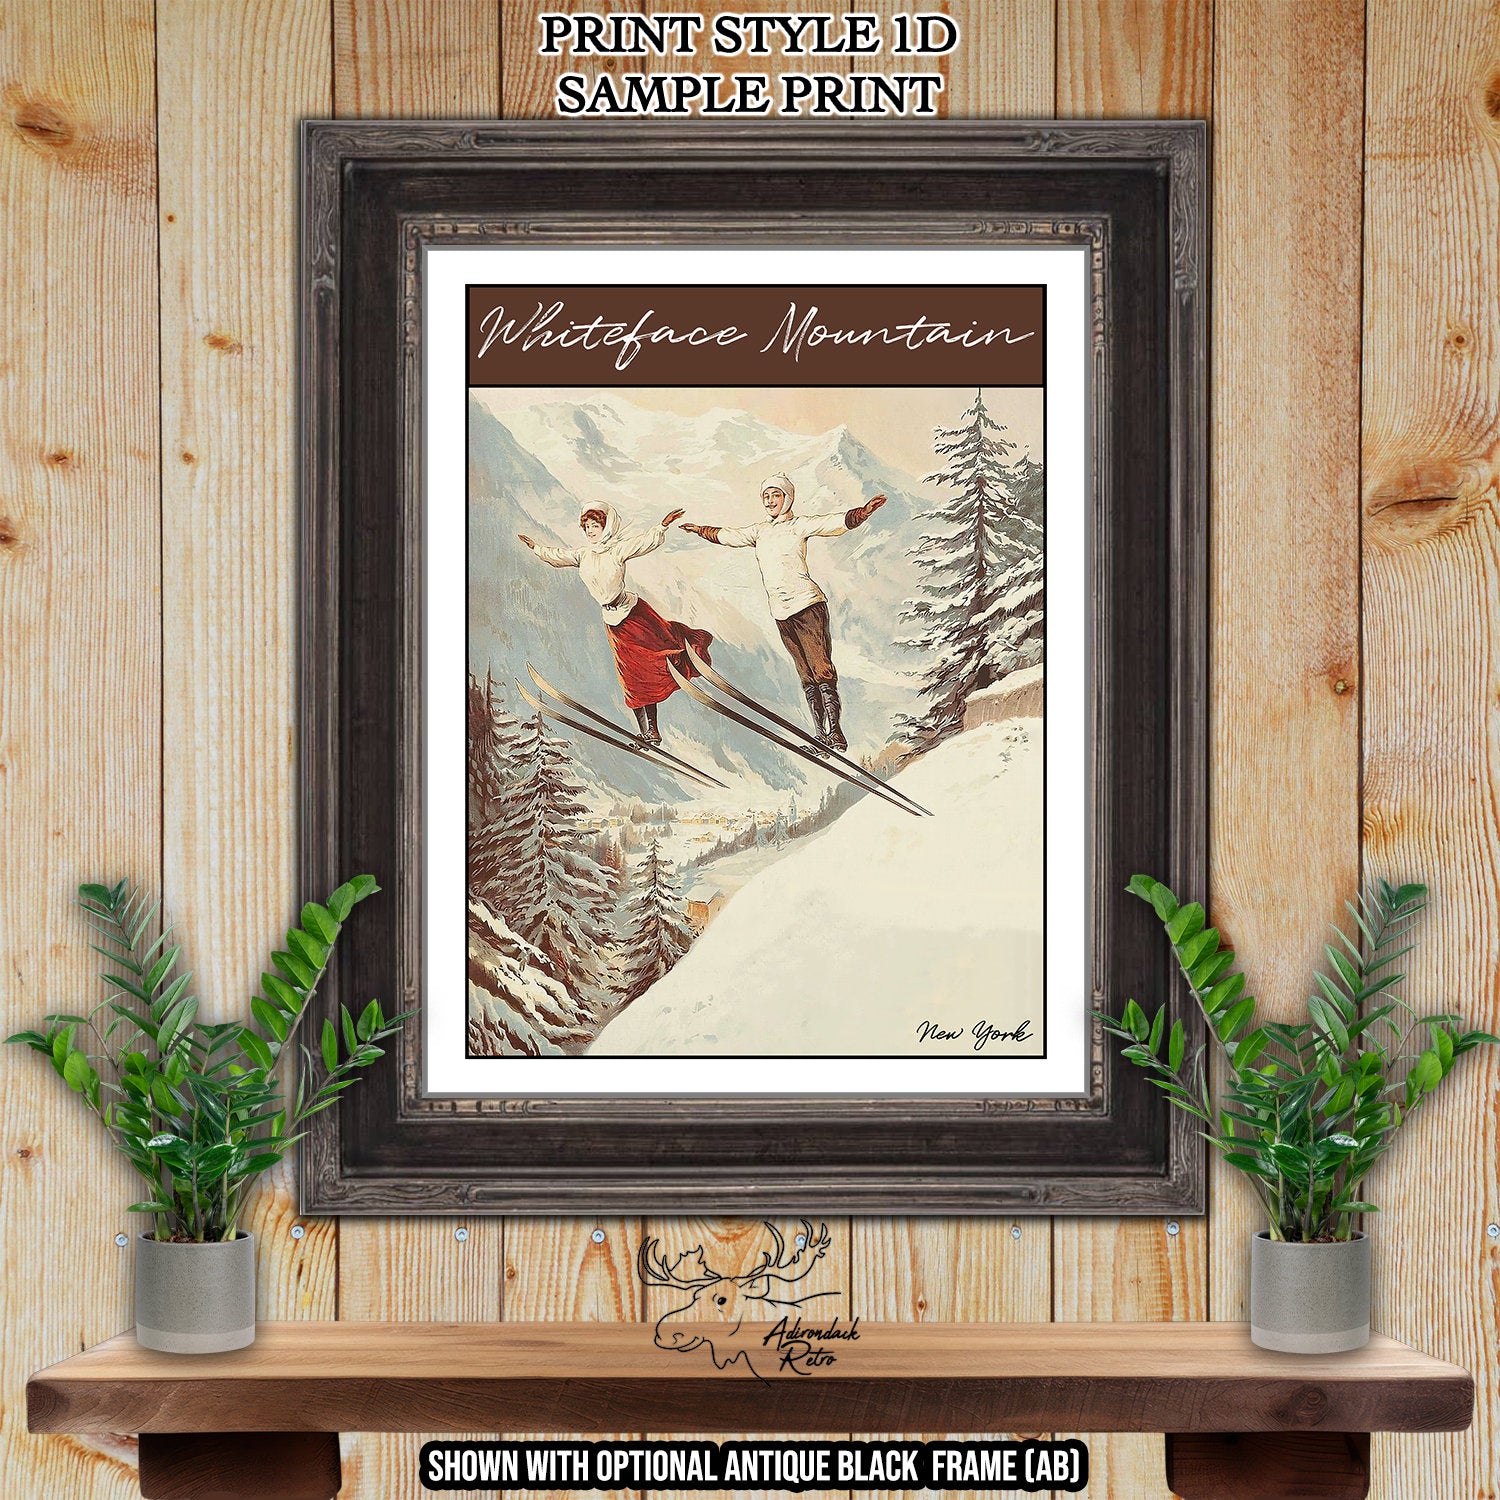 Jay Peak Vermont Retro Ski Resort Print